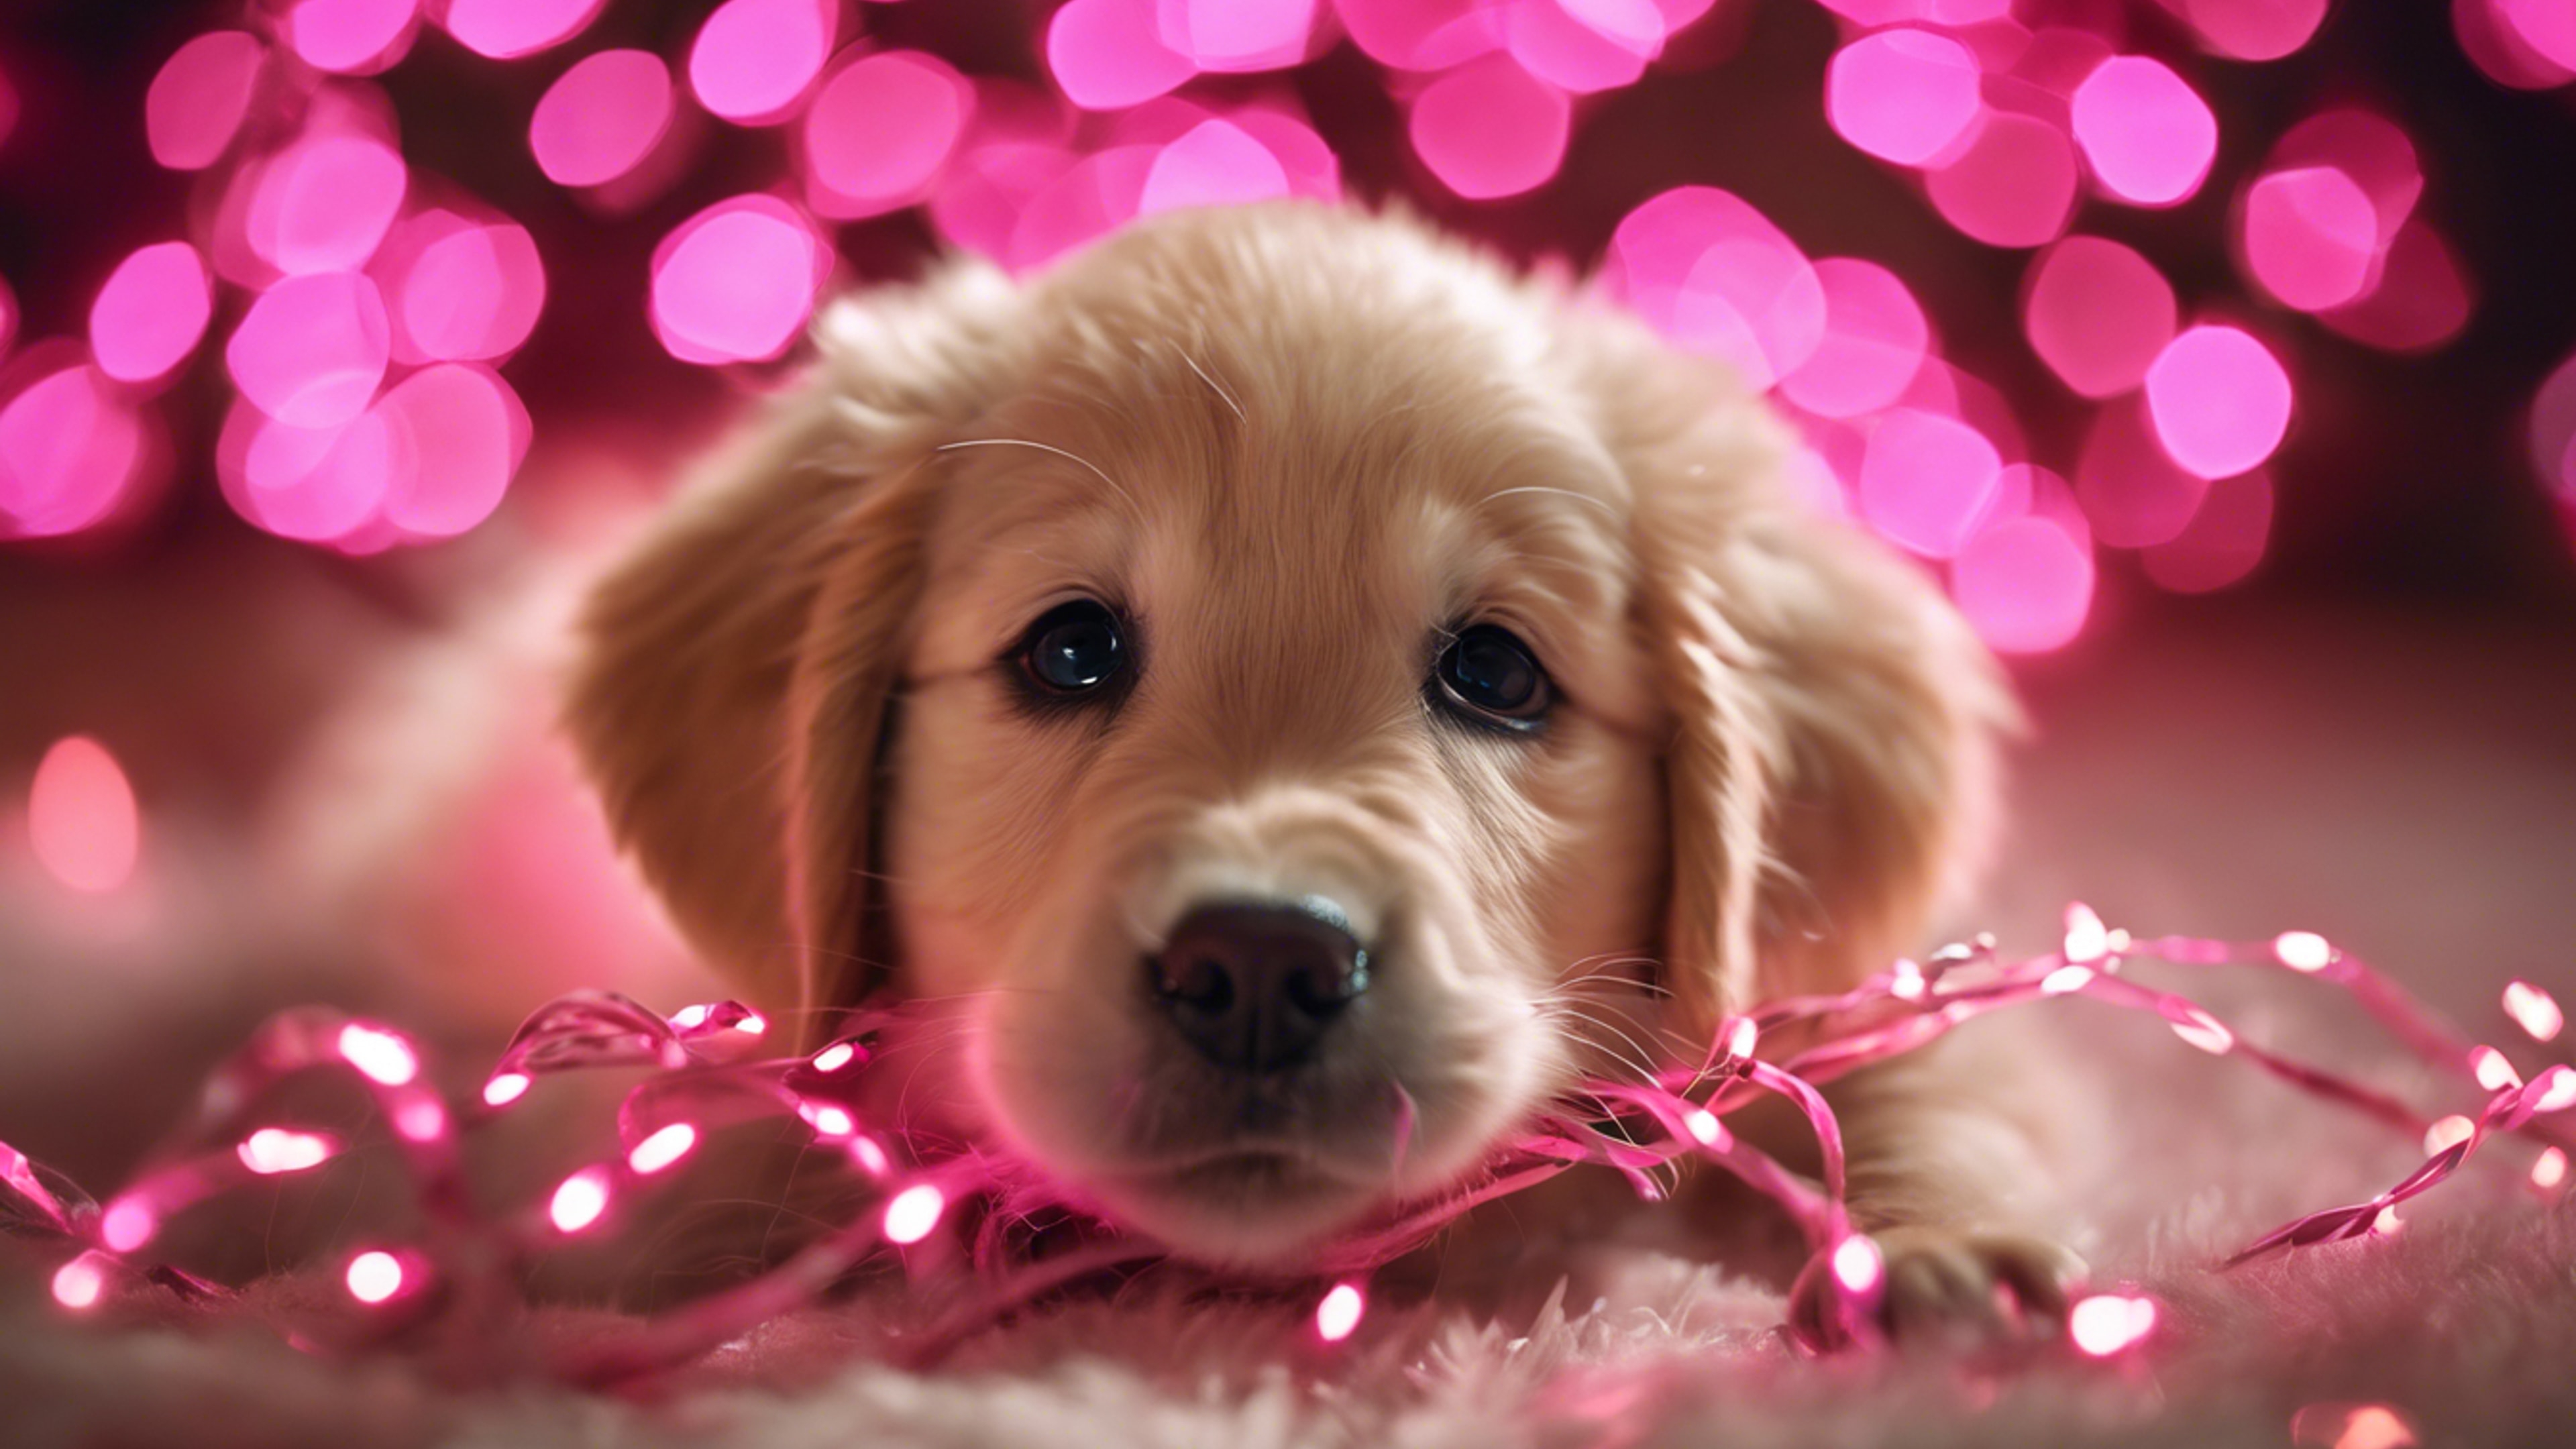 A golden retriever puppy adorably tangled in pink Christmas lights. Hình nền[26994d3815c0460ab11e]